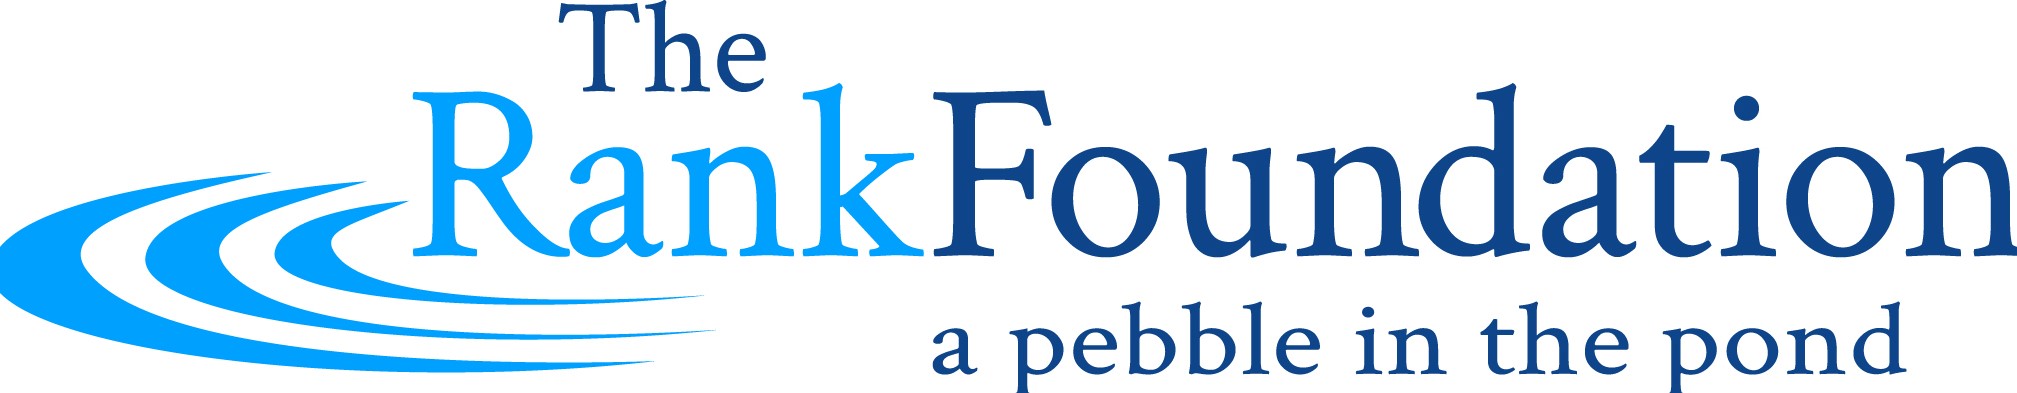 Rank Foundation logo